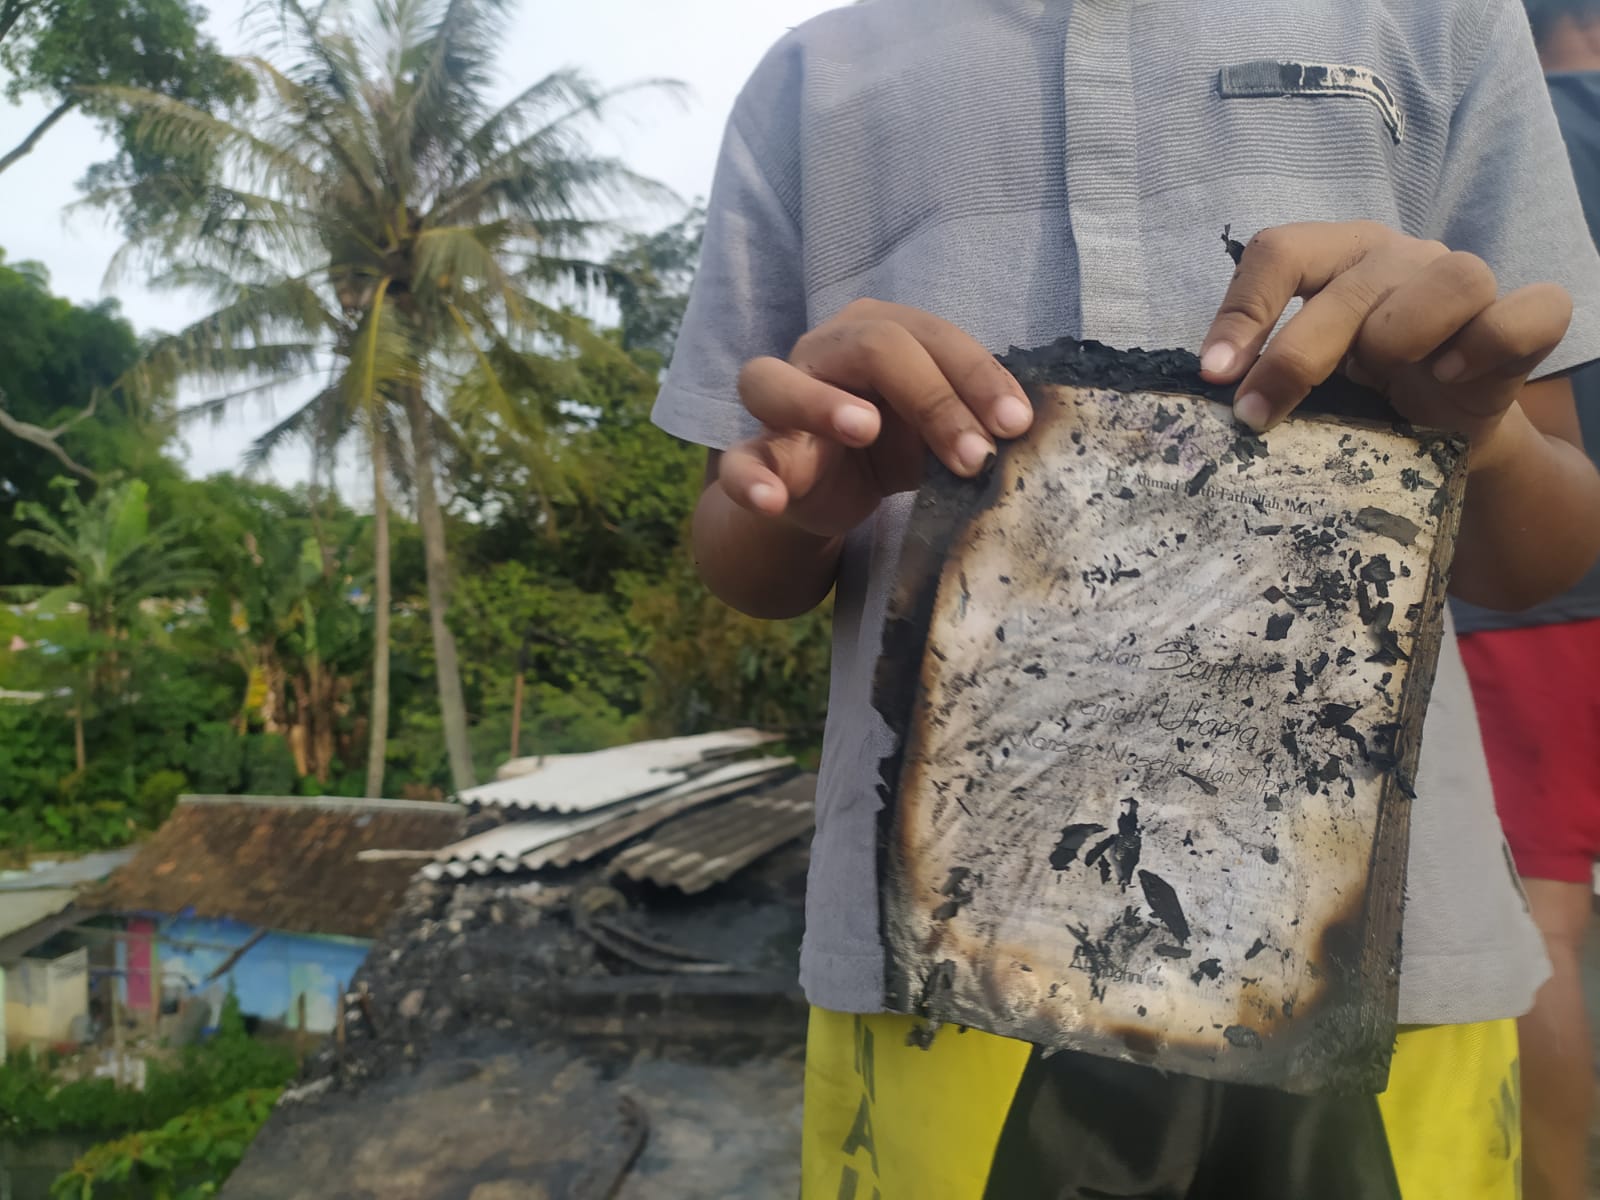 DILALAP SI JAGO MERAH: Satu atap rumah hangus terbakar yang merupakan tempat anak mengaji di Kertajaya, Kabupaten Bandung. (AKMAL FIRMANSYAH/JABAR EKPRES)